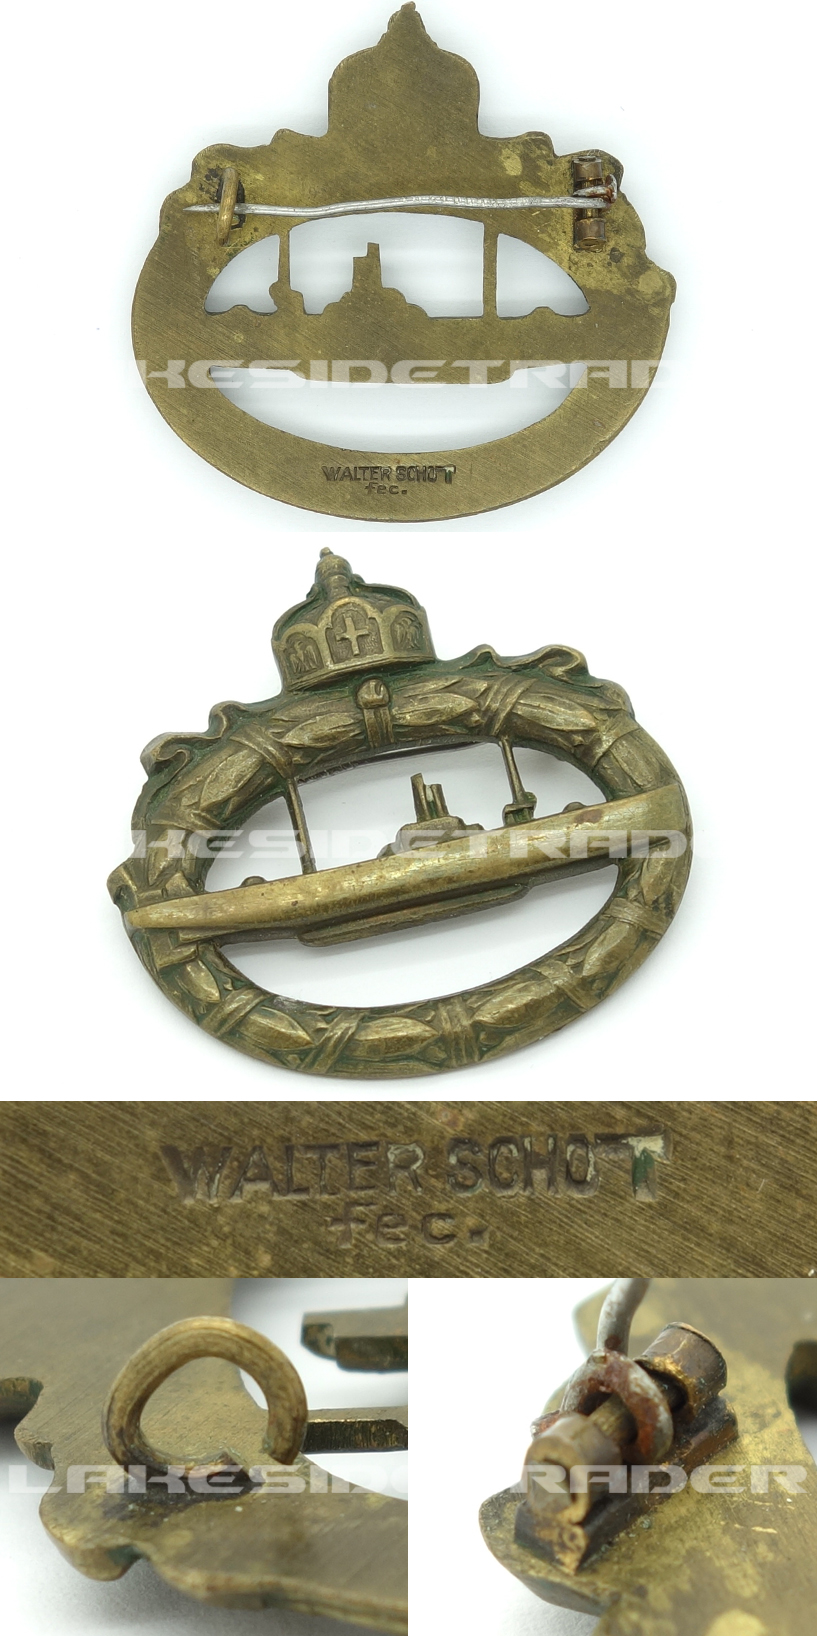 Imperial Navy U-Boat War Badge by Walter Schot